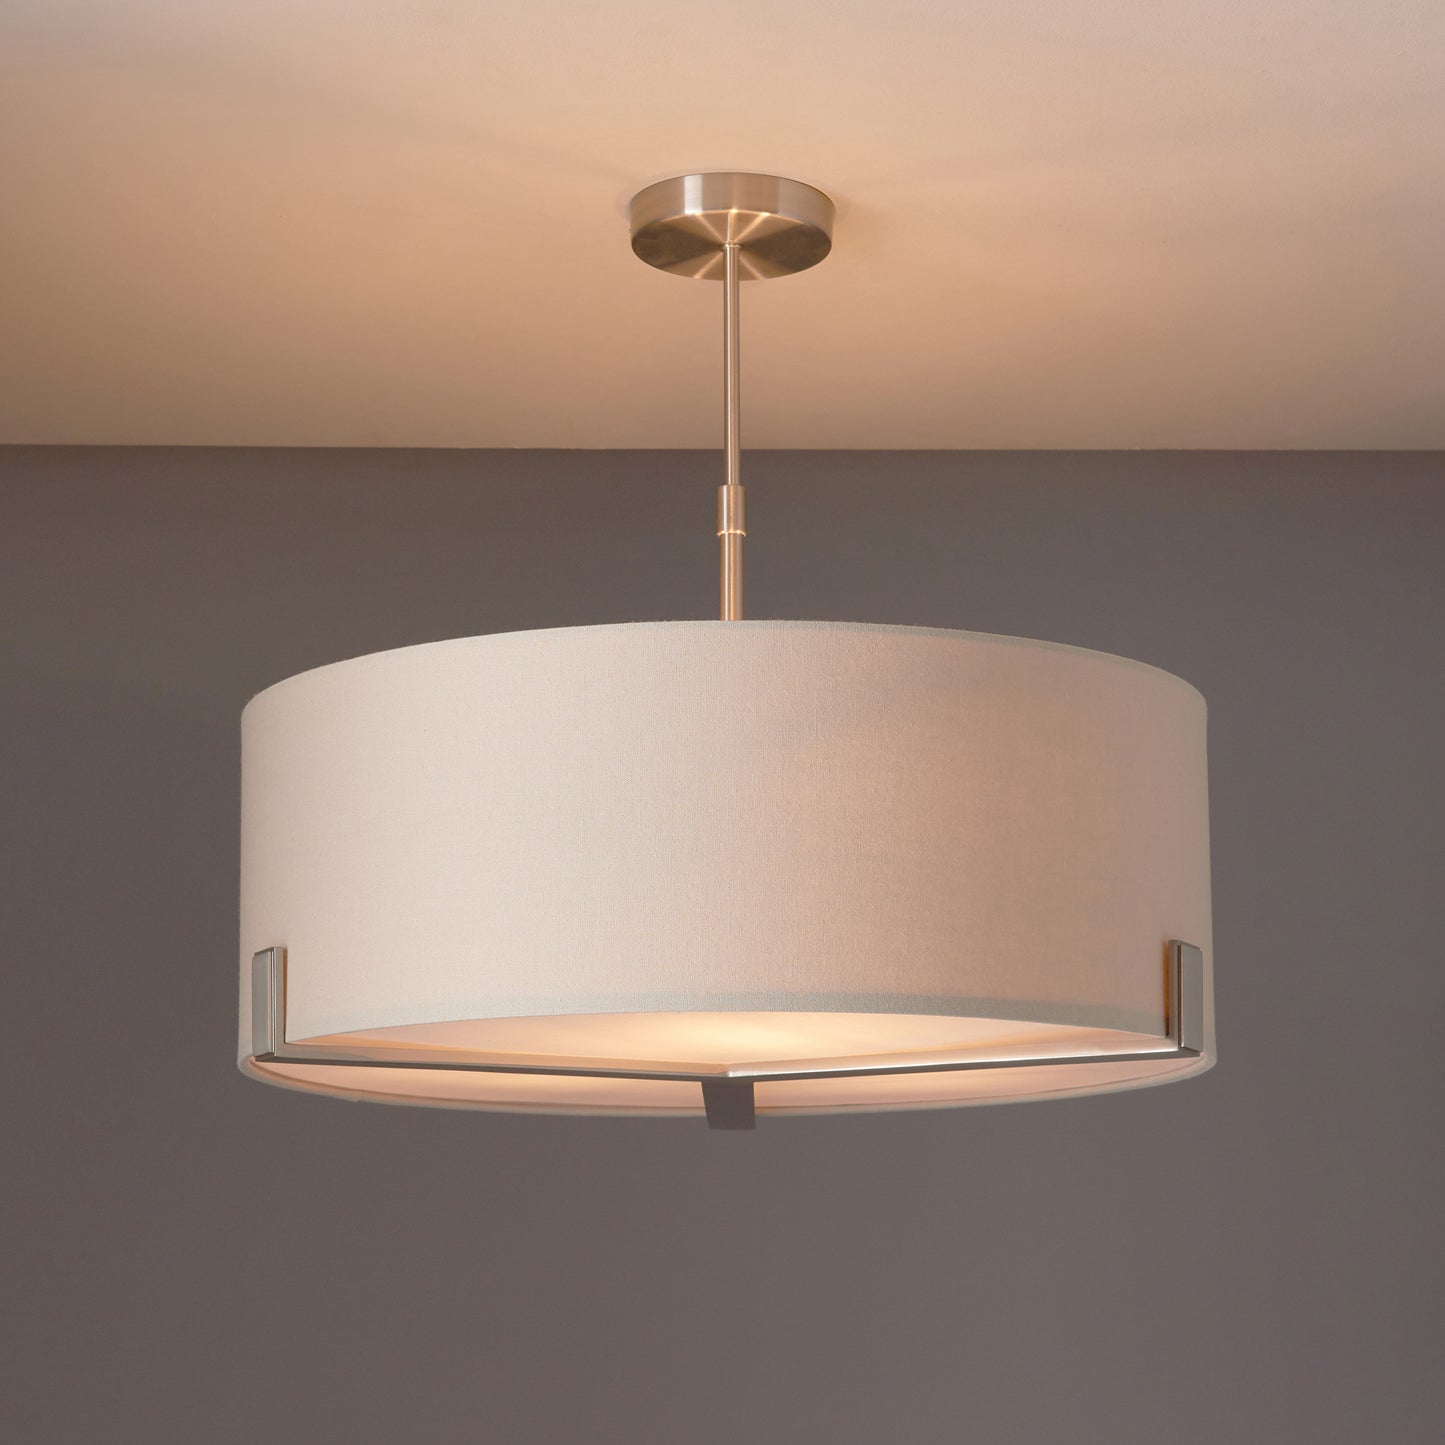 A modern Hayfield Pendant Light Nickel/Slate light fixture for interior decor.